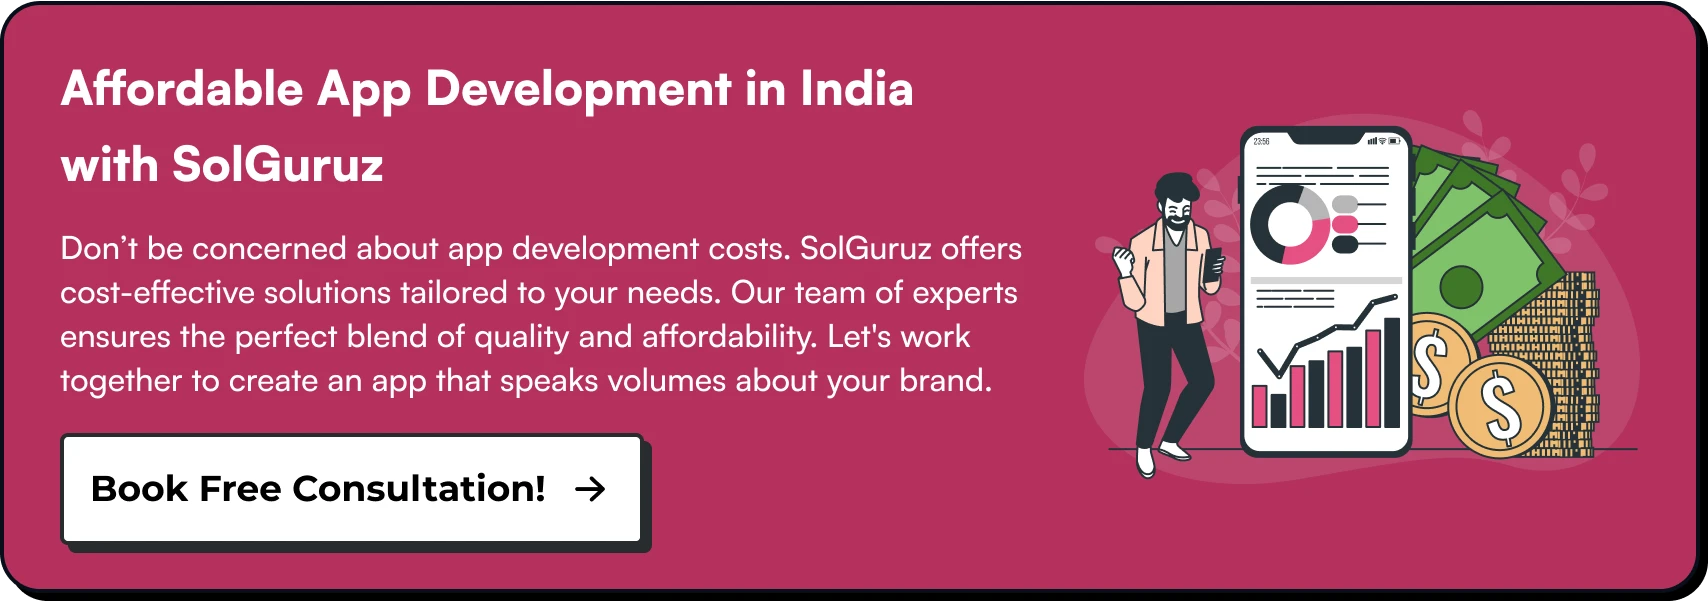 Affordable App Development in India with SolGuruz